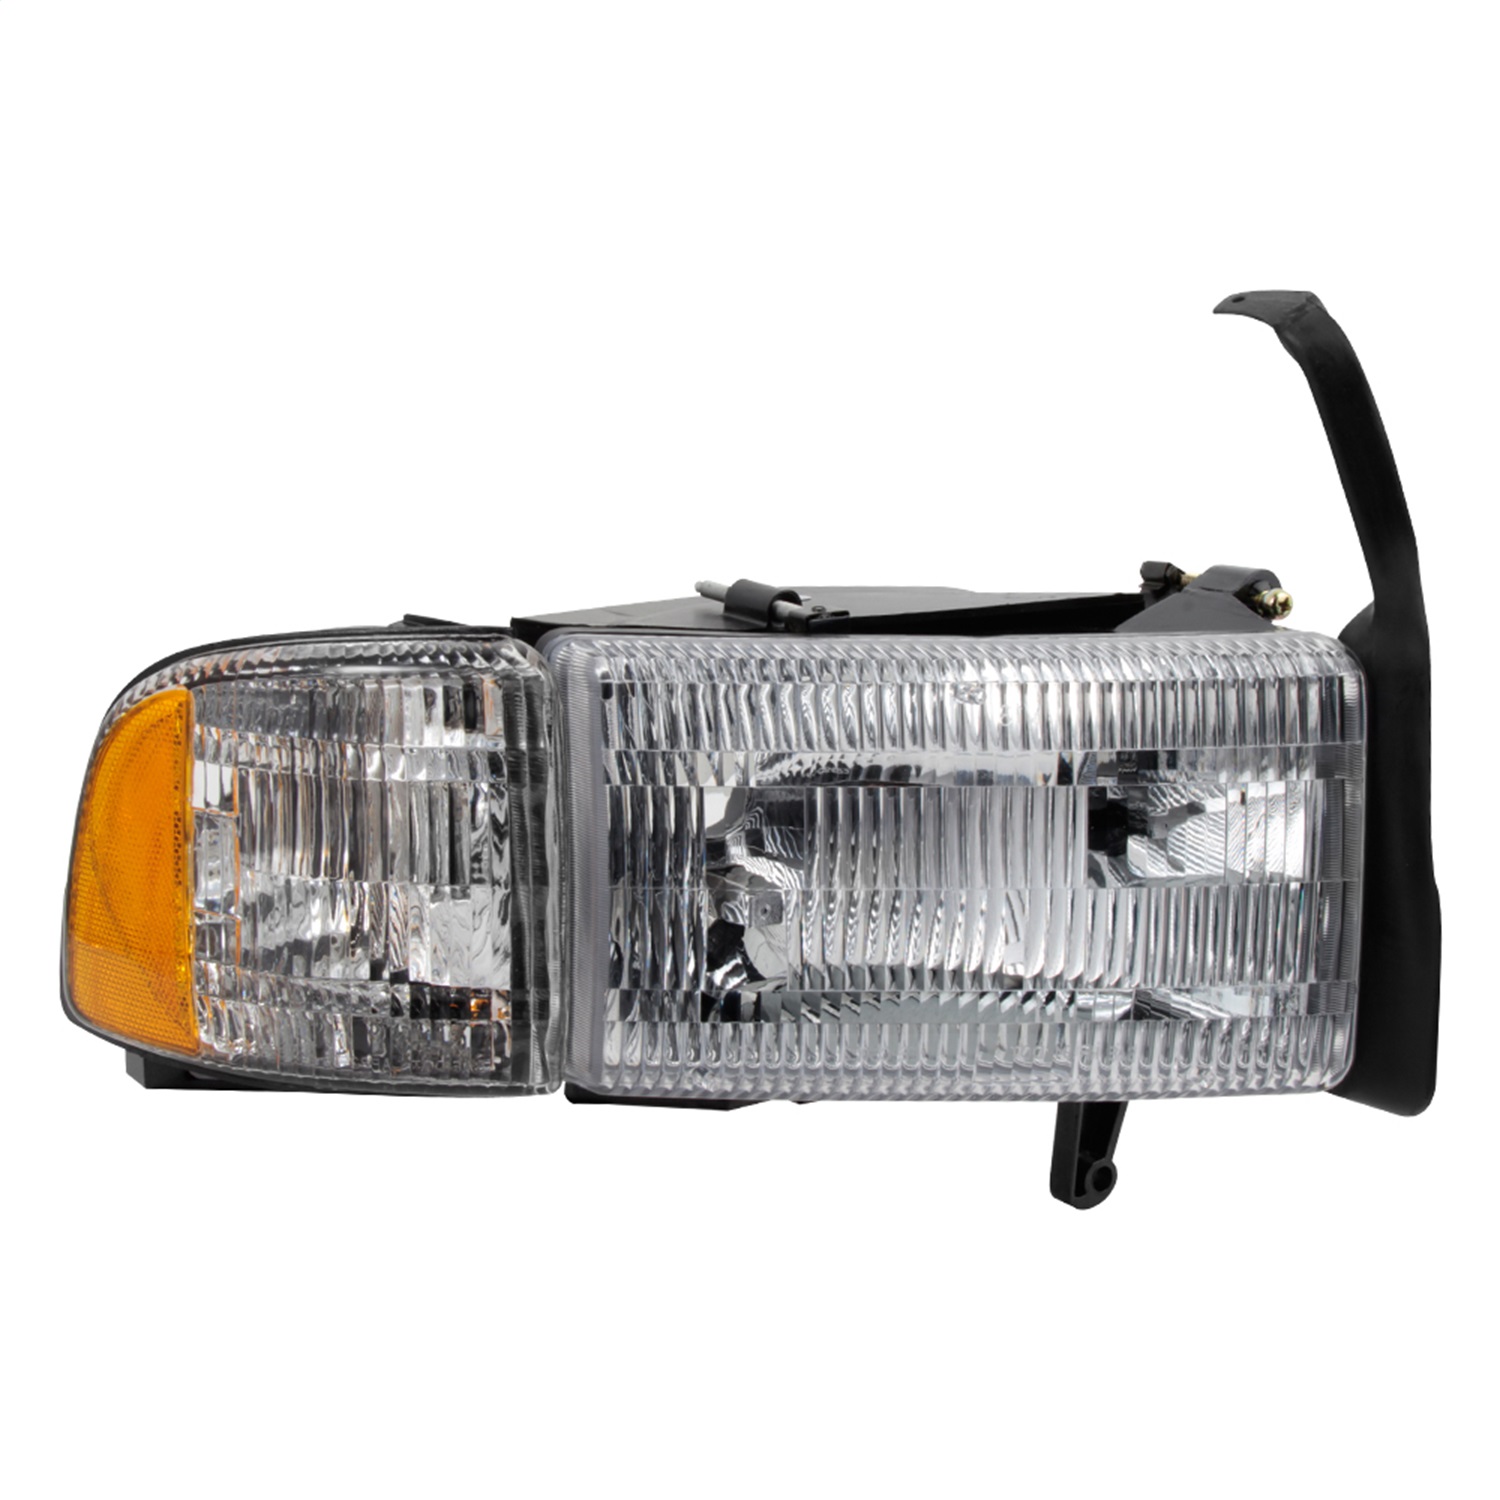 Spyder Auto 9038181 XTune Tail Light Fits 94-02 Ram 1500 Ram 2500 Ram 3500